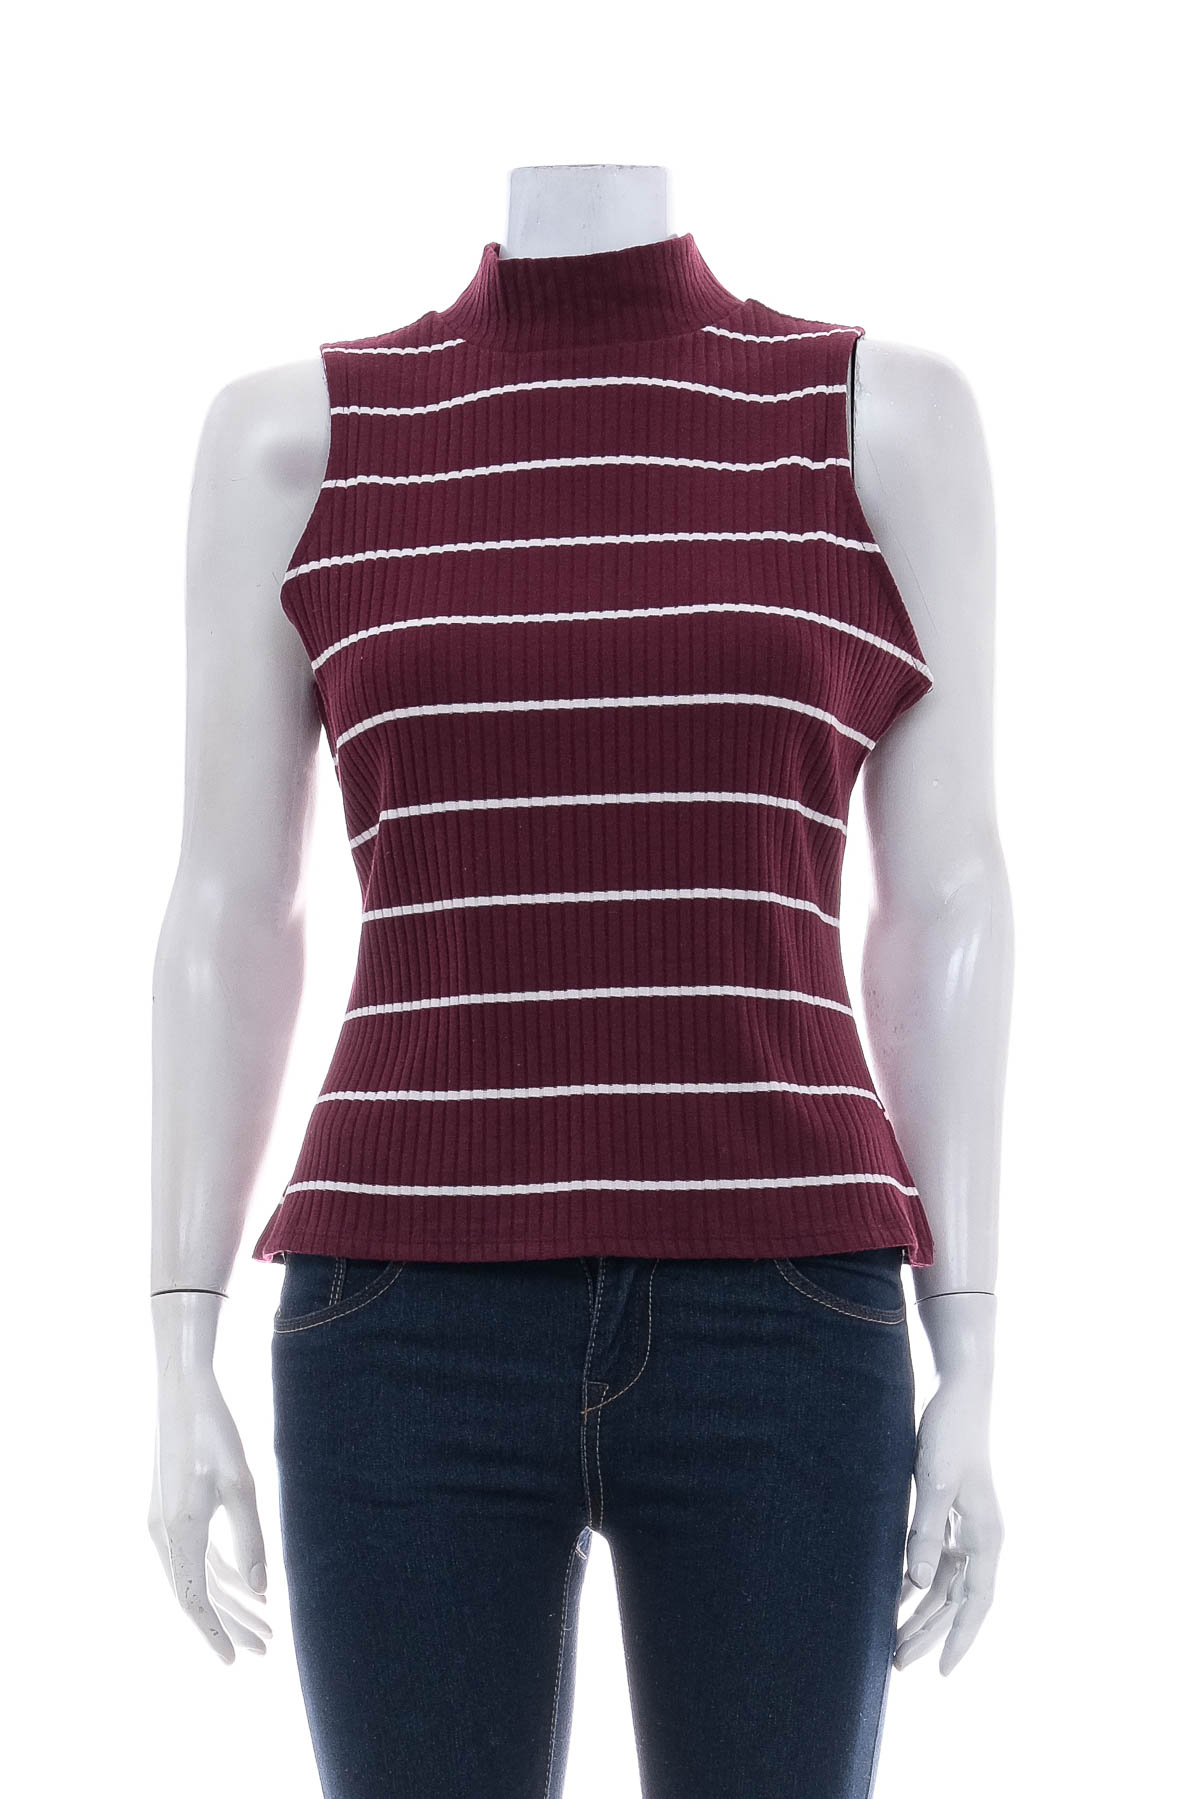 Women's sweater - ARIZONA JEAN CO - 0